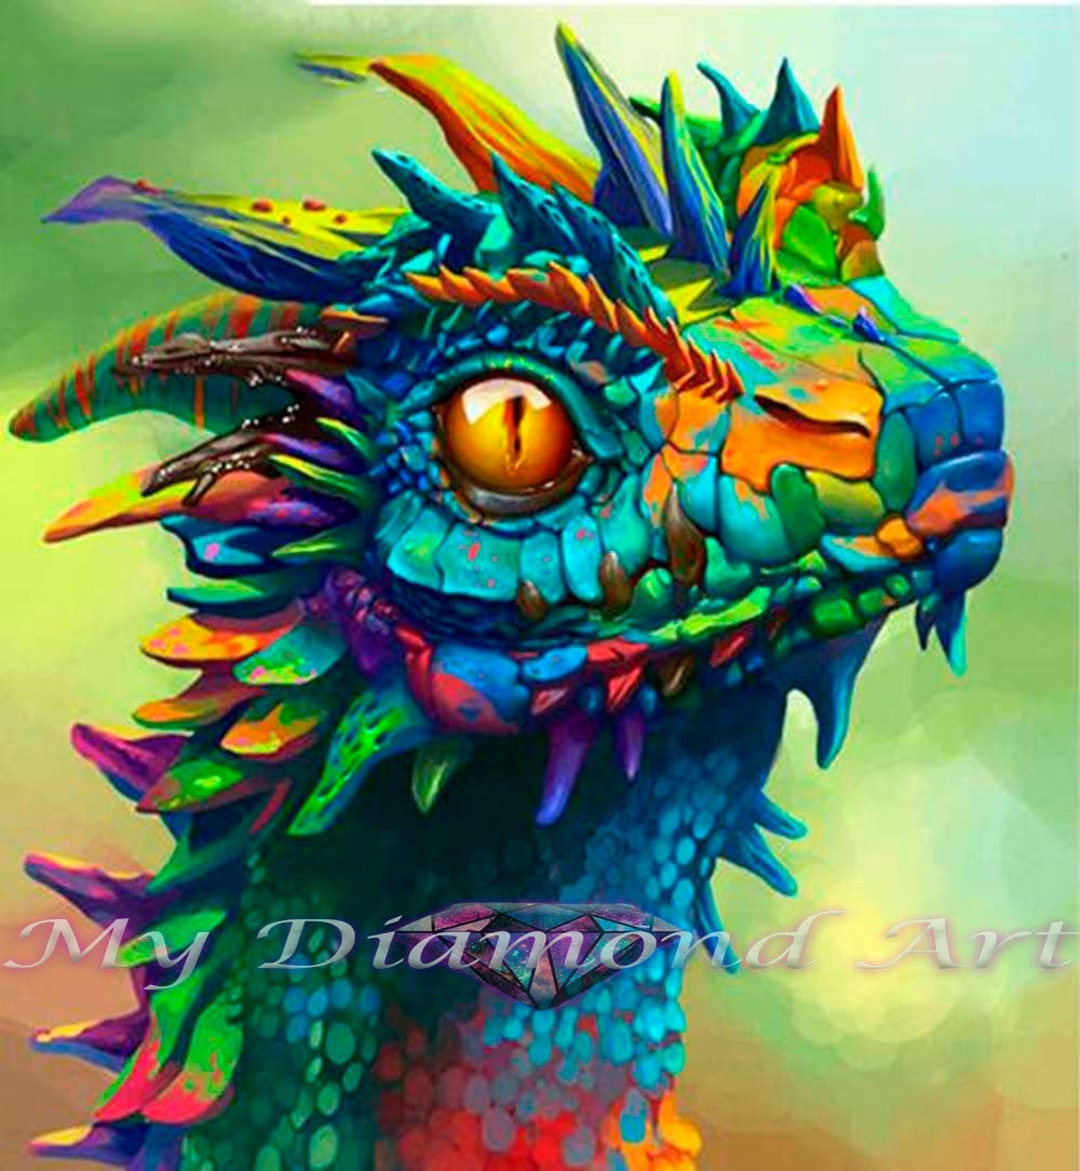 Dragon Girl Myth, 5D Diamond Painting Kits